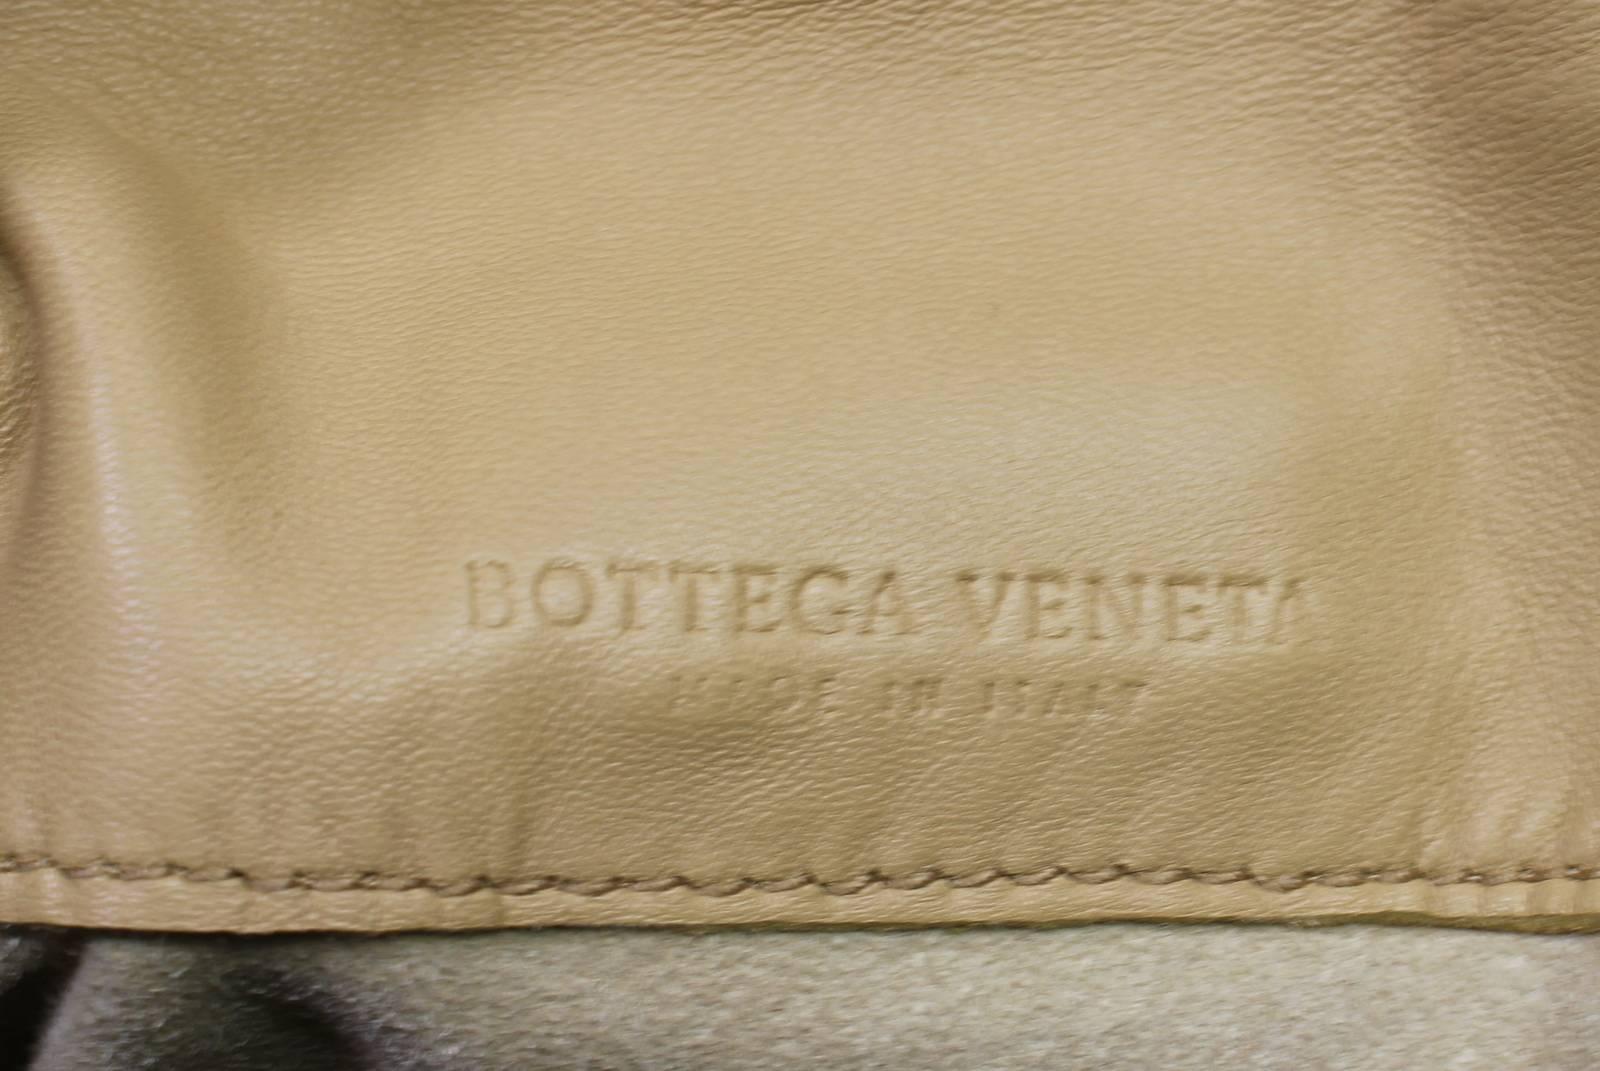 Bottega Veneta Brown Python Crocker Bag For Sale 4